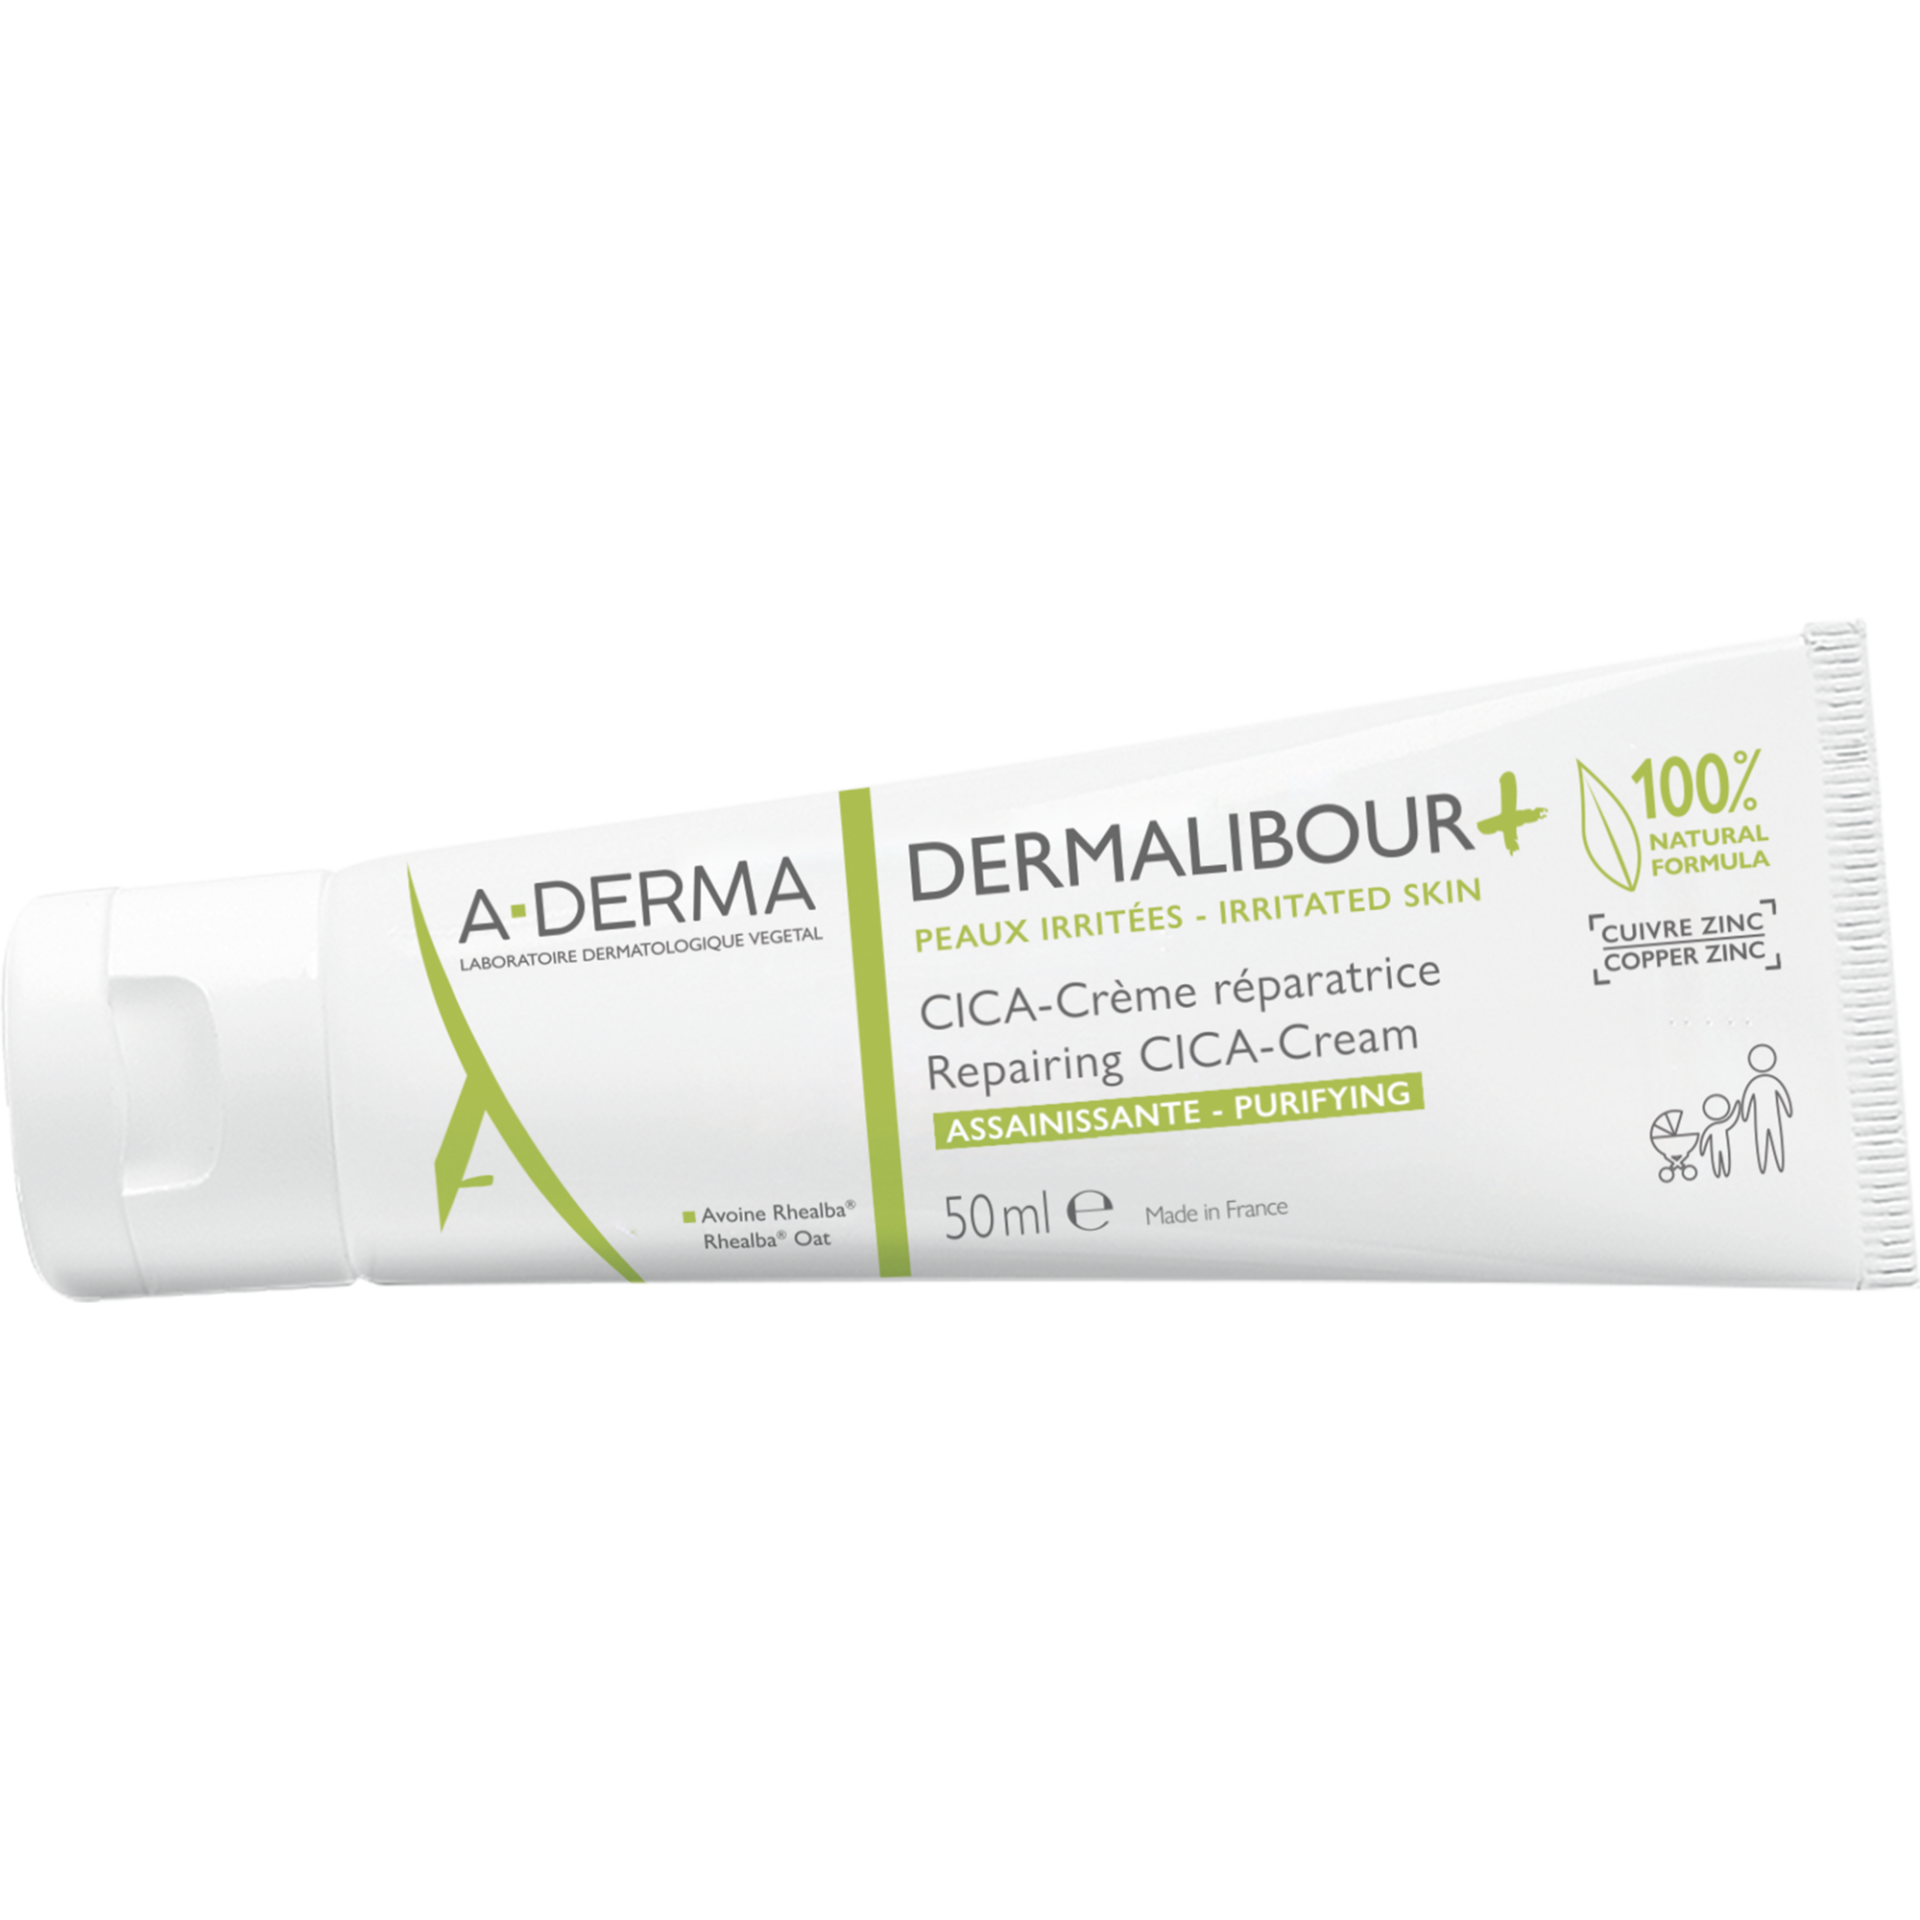 A-Derma Dermalibour+ obnavljajoča CICA-krema, 50 ml